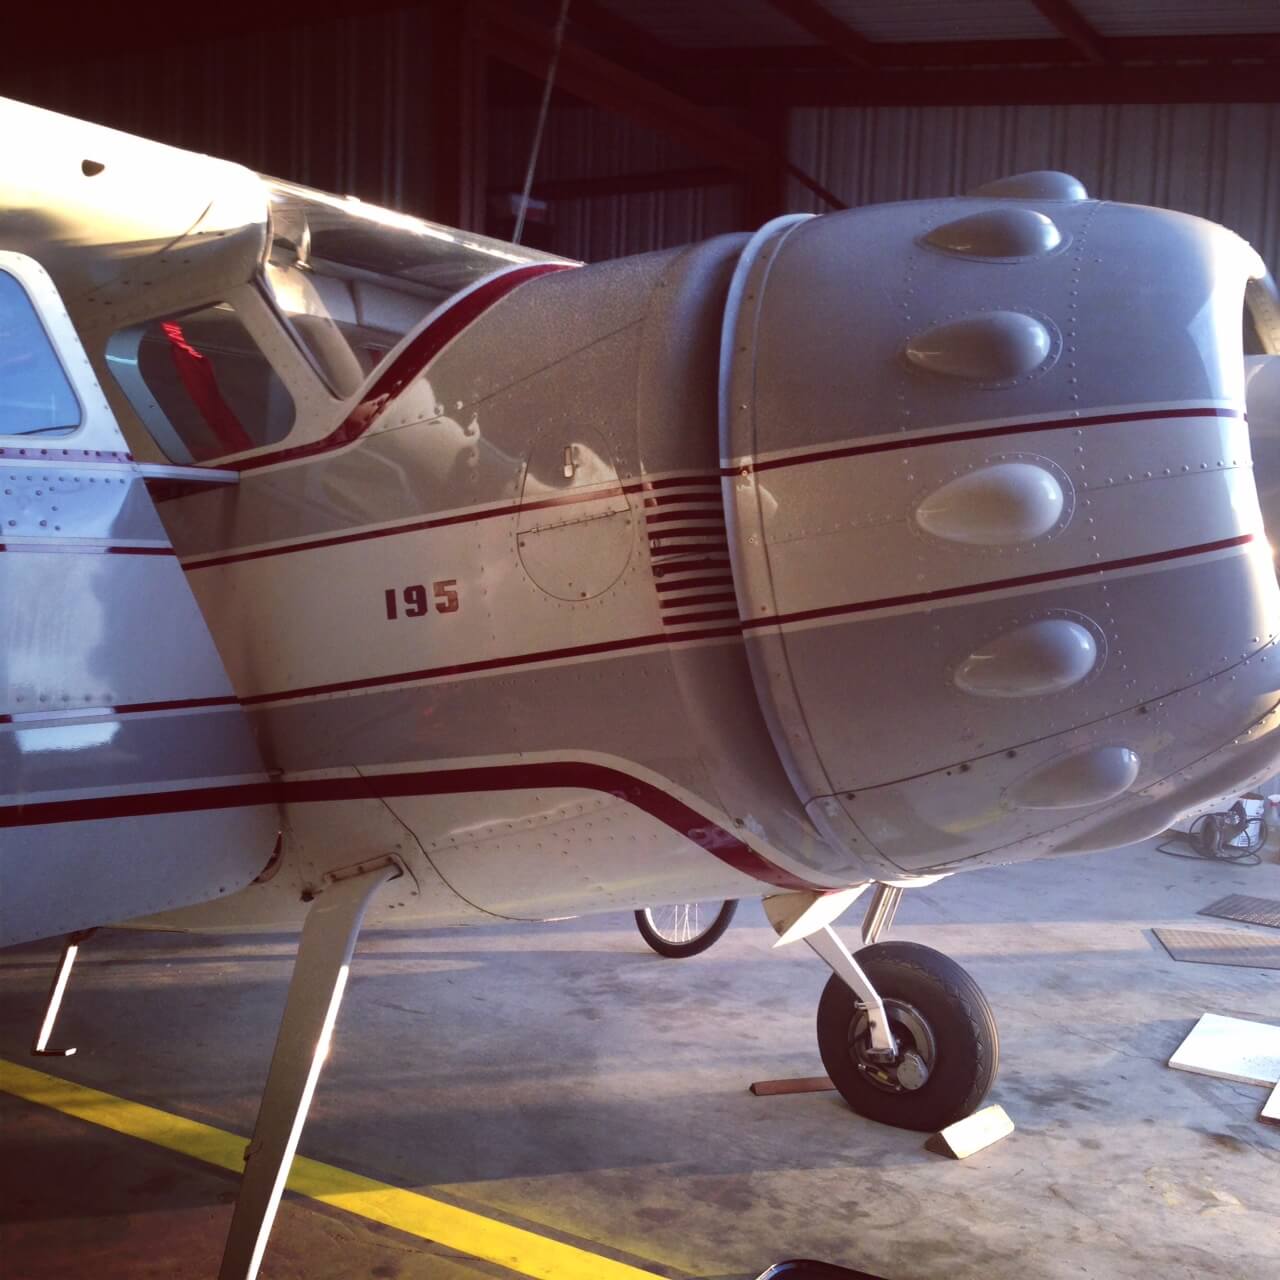 Cessna 195 in hangar